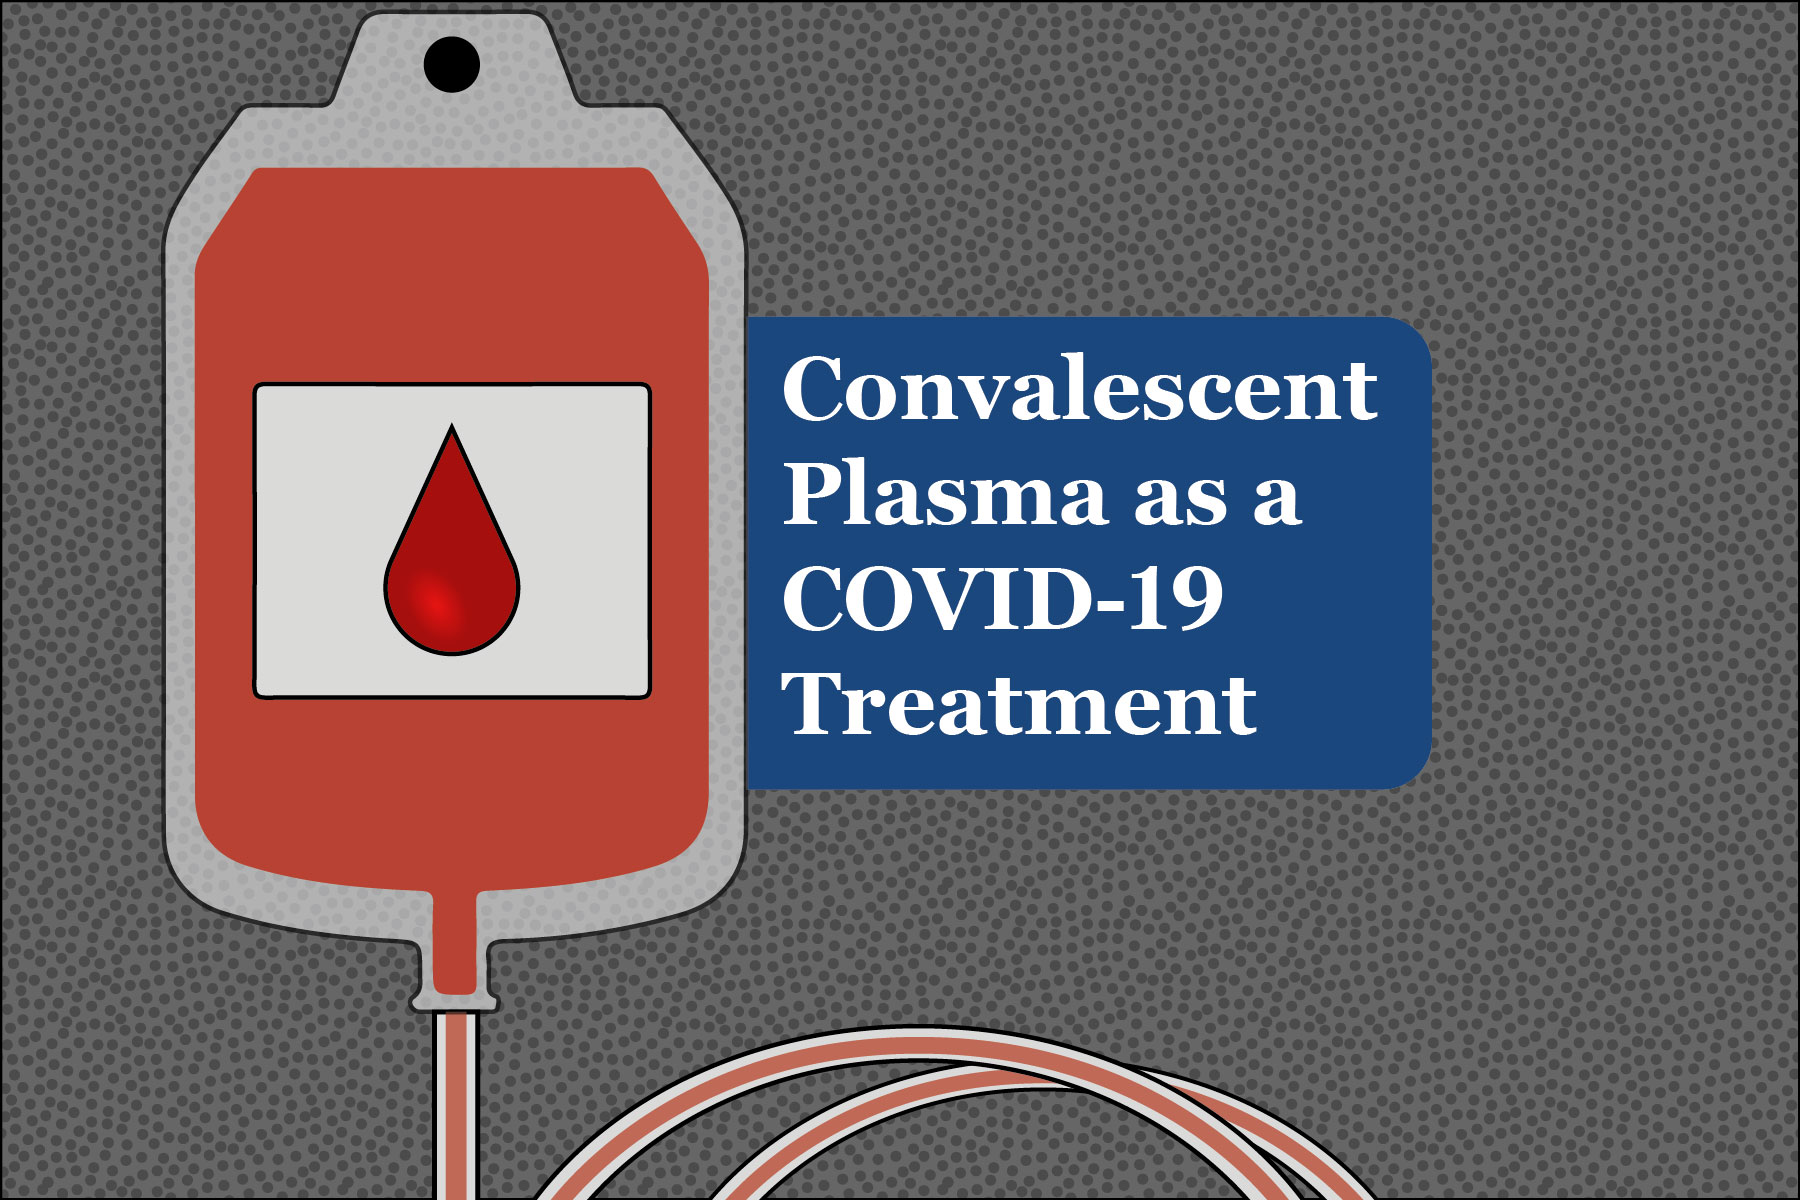 Convalescent Plasma as a COVID-19 Treatment